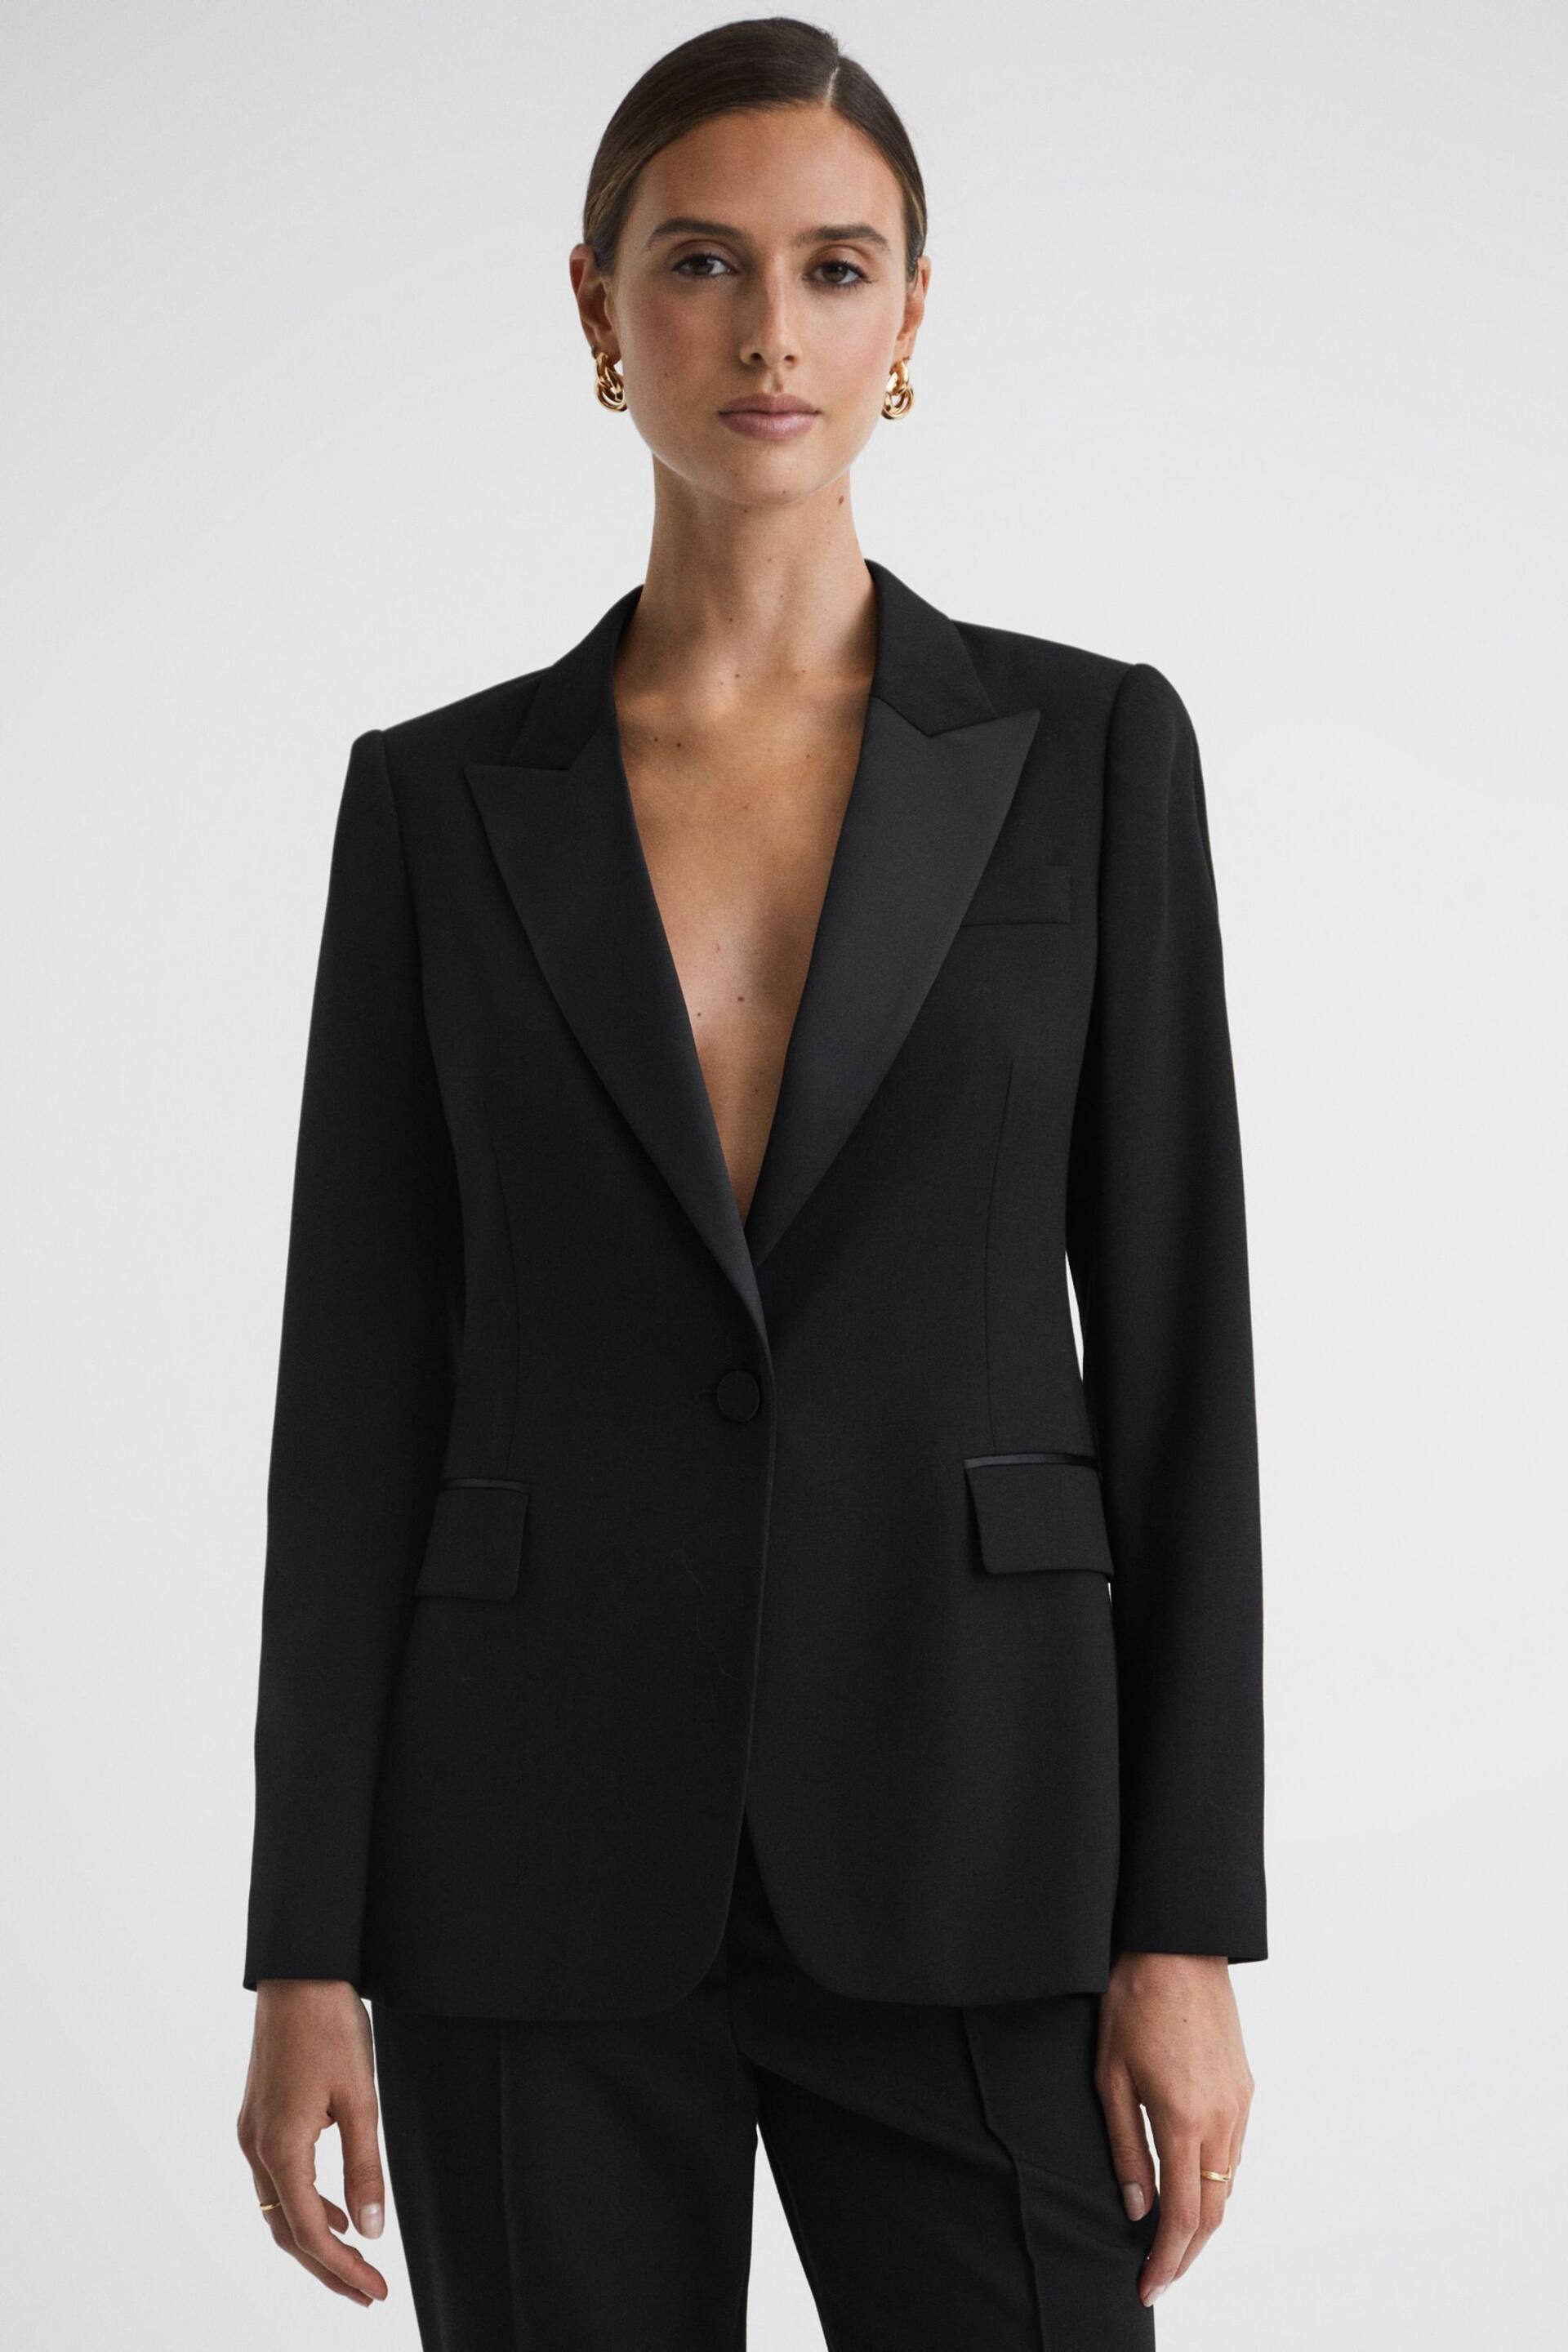 Reiss Black Alia Slim Fit Single Breasted Satin Suit Blazer - Image 1 of 5